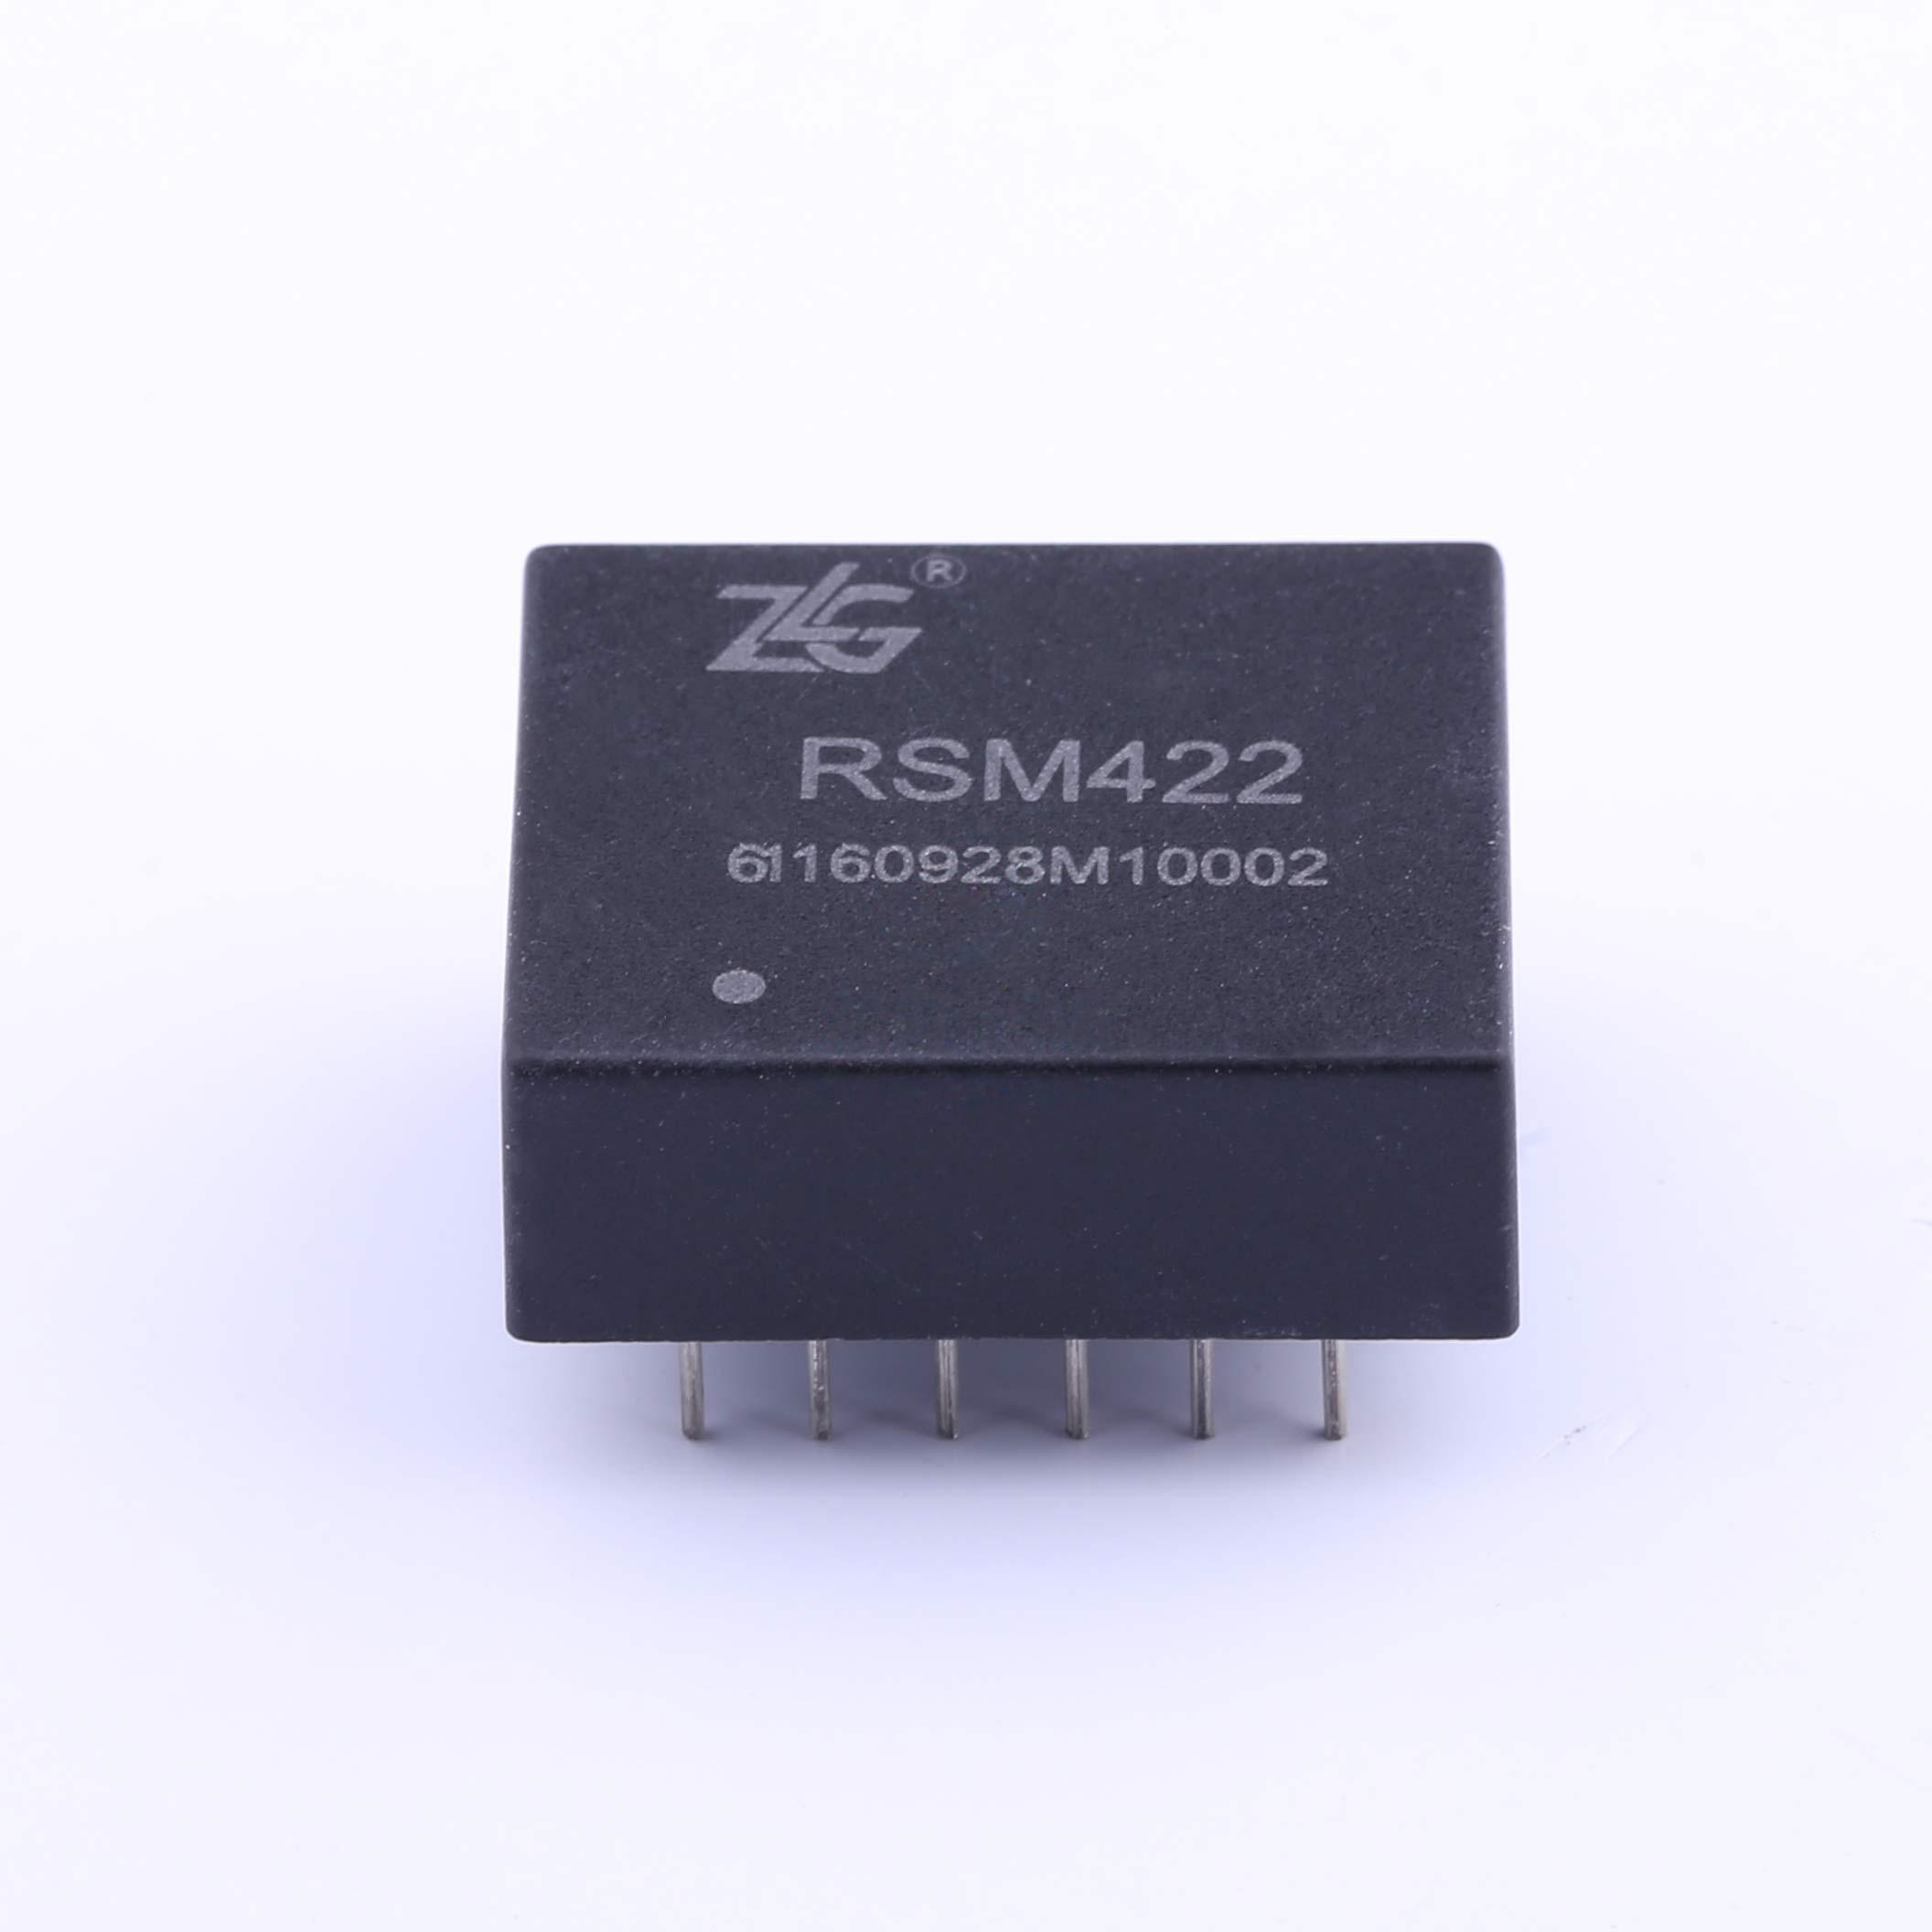 RSM422